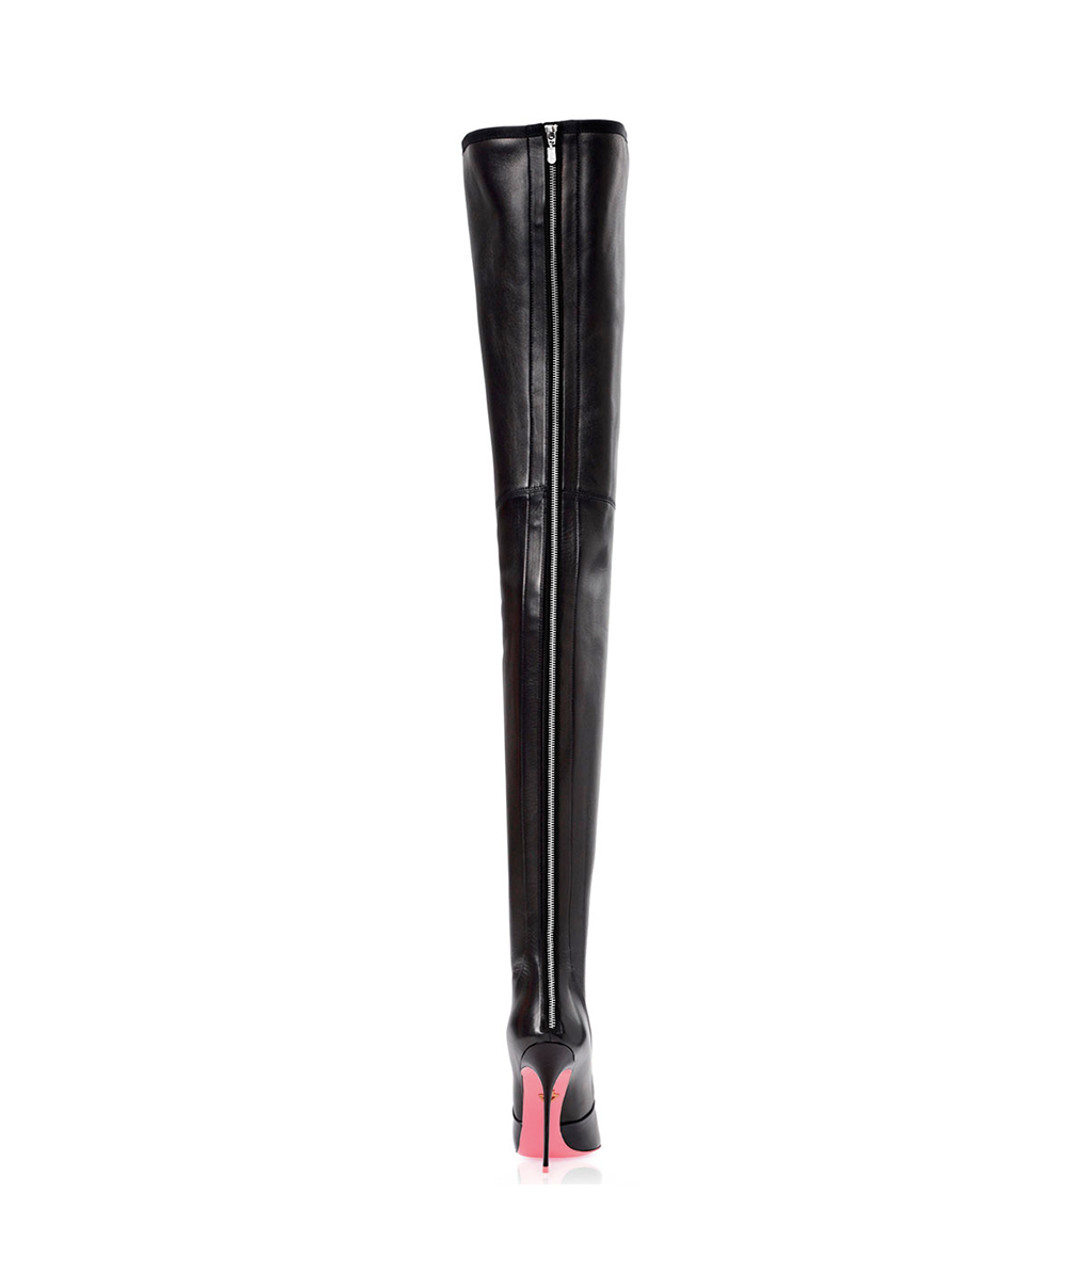 Cursa Black stretch · Charlotte Luxury High Heels Boots